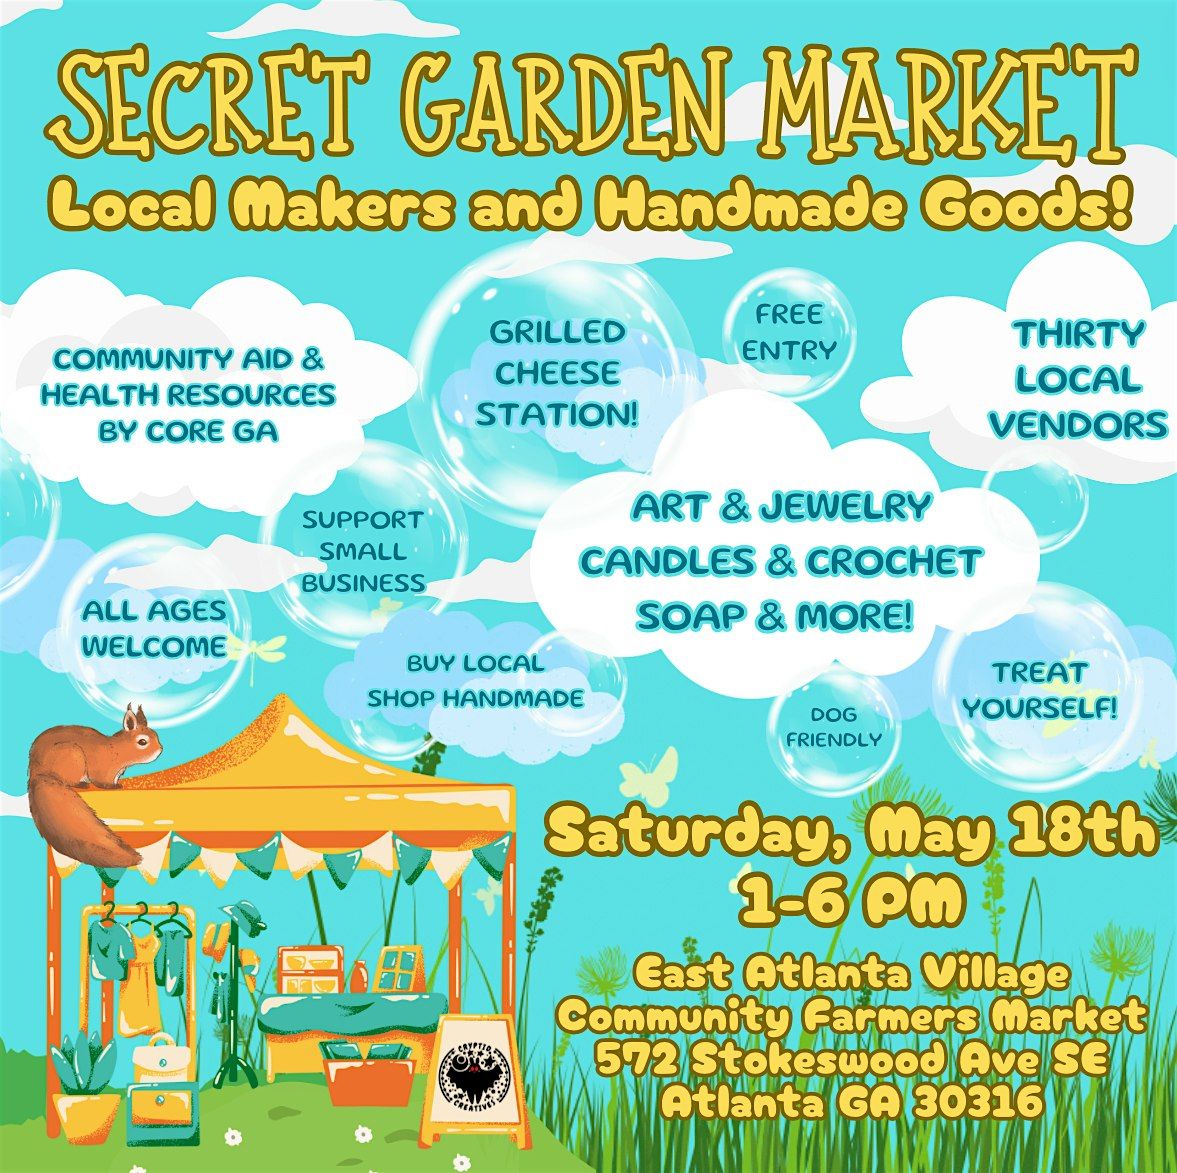 Secret Garden Market: Local Makers and Handmade Goods!